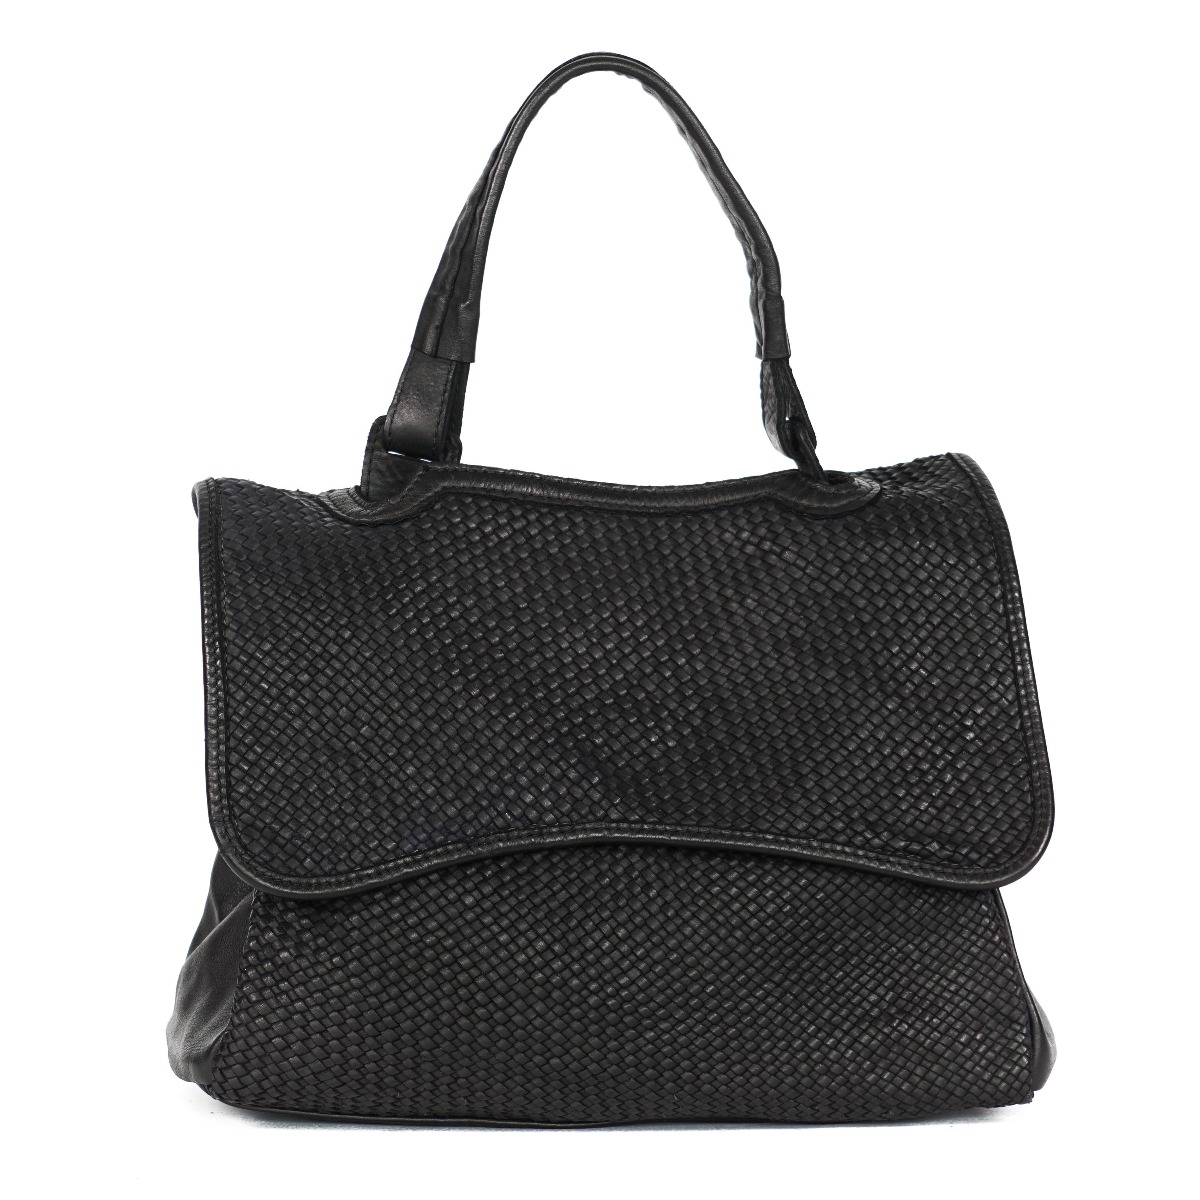 Medium size black woven leather top handle bag